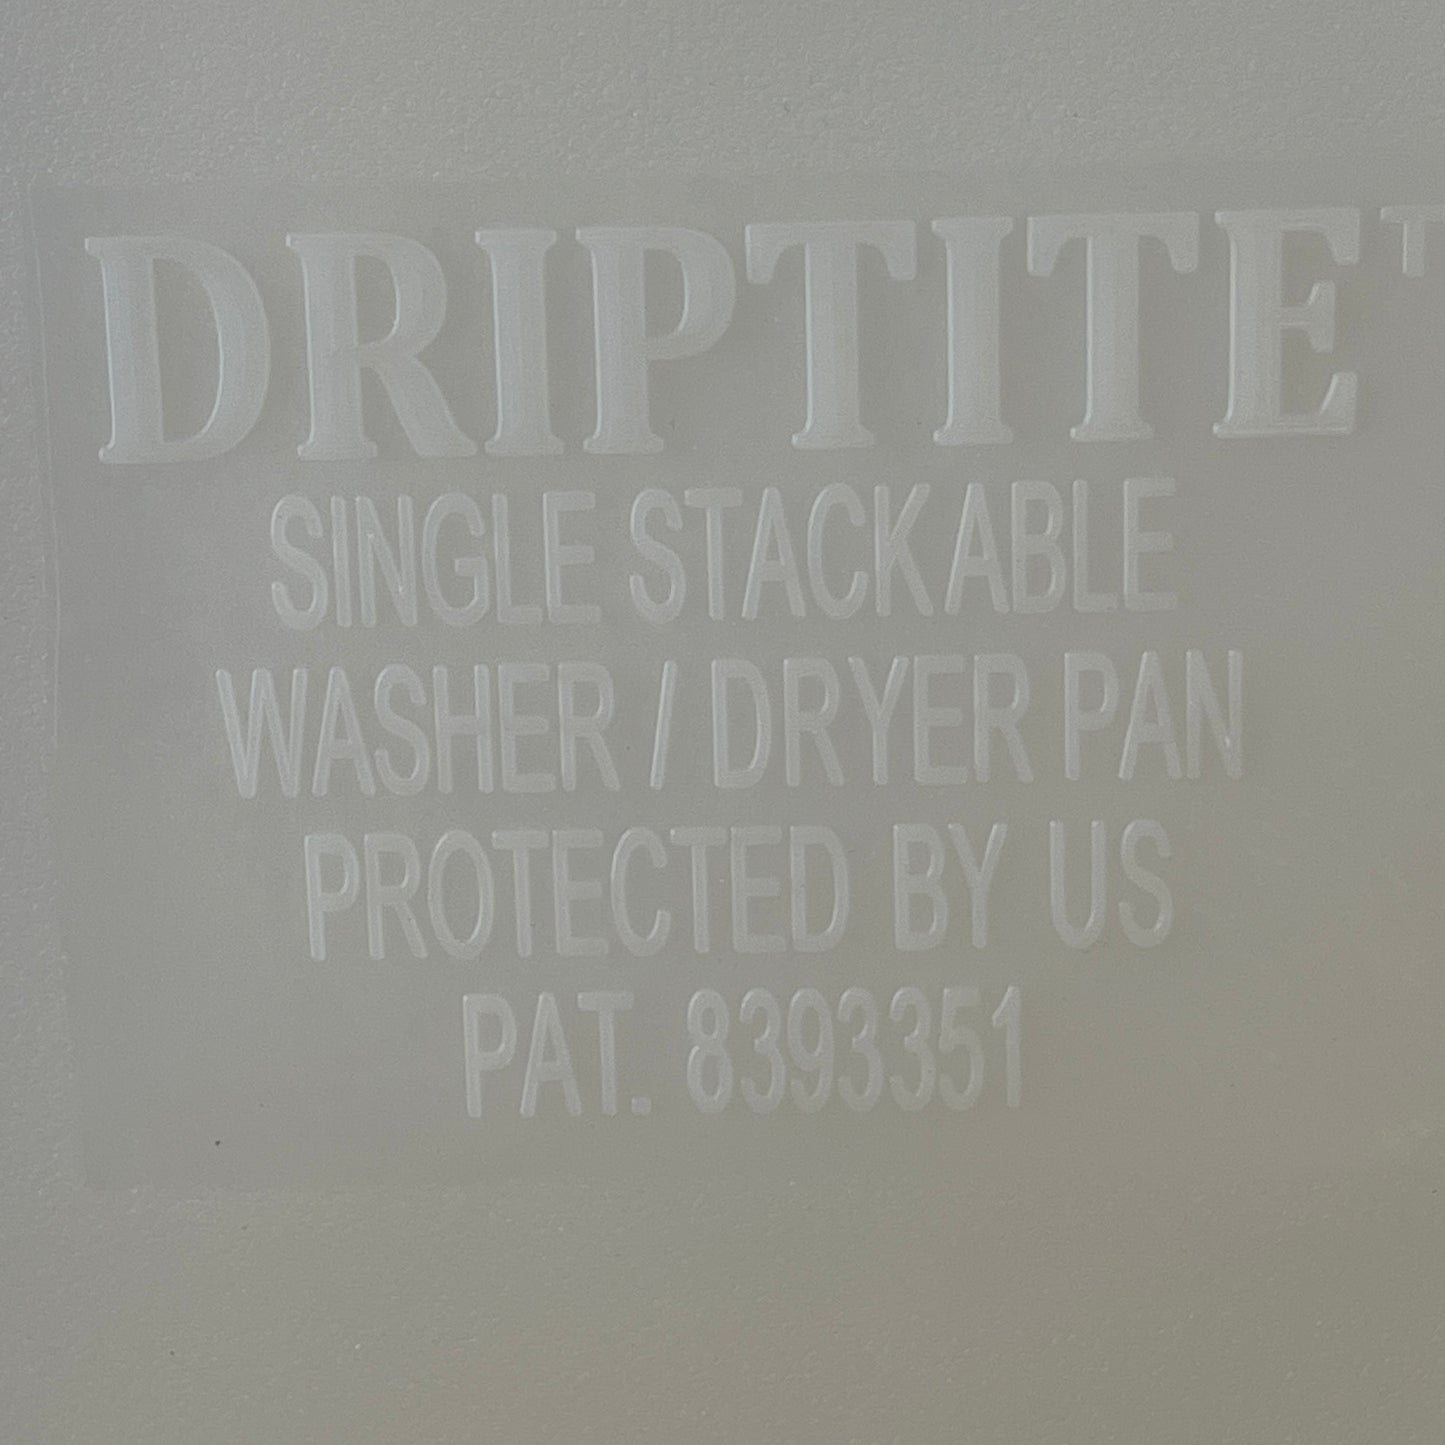 DRIPTITE "Unbreakable" Single / Stackable Washer & Dryer Pan Sz 30.5" W x 34.5" D (New)